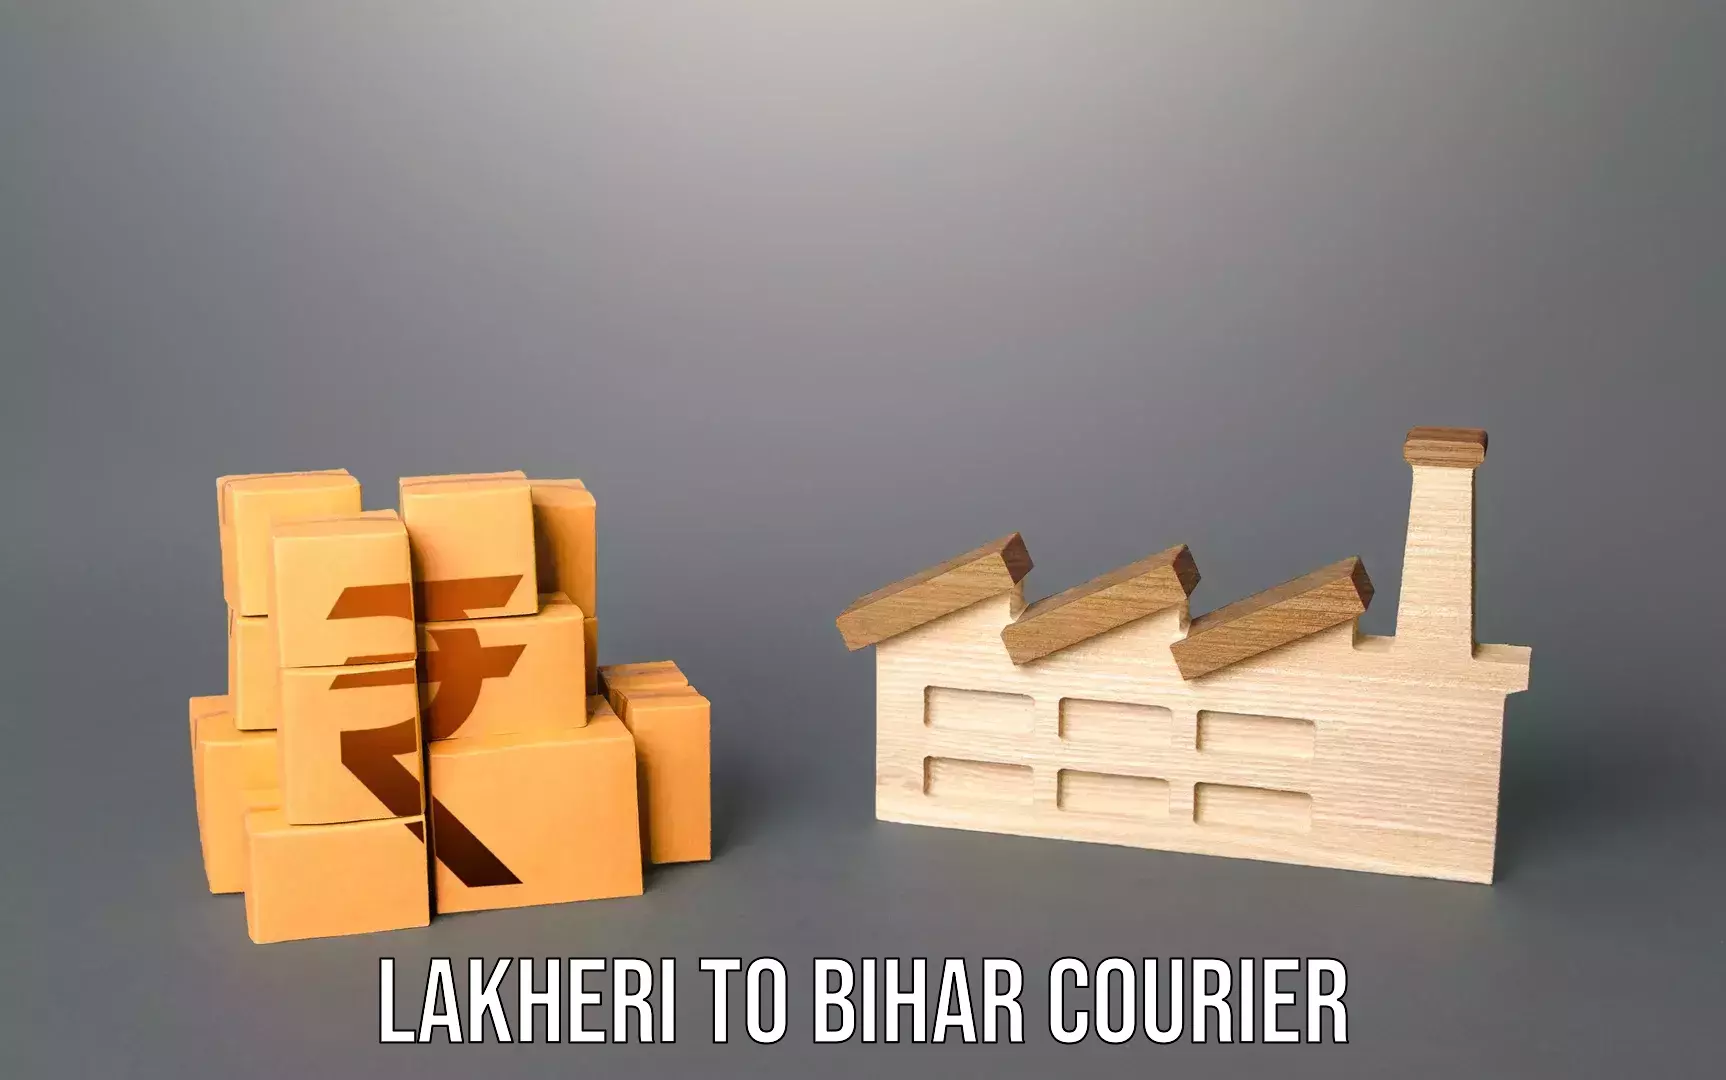 Emergency baggage service Lakheri to Bihar